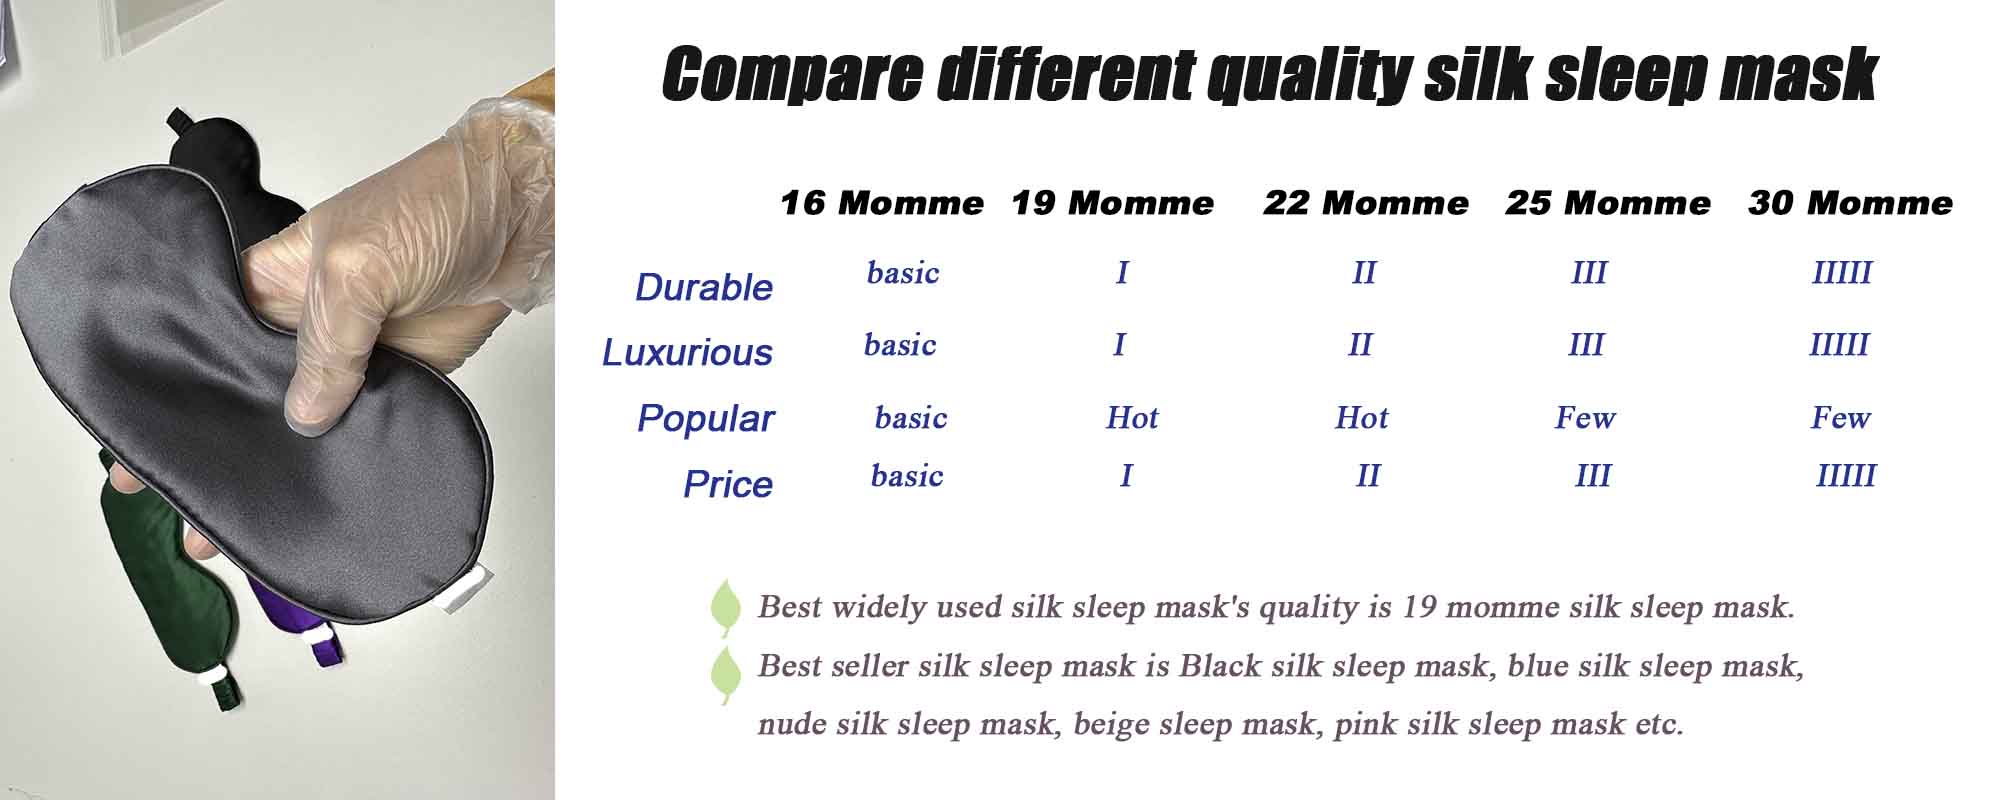 pure silk sleep mask